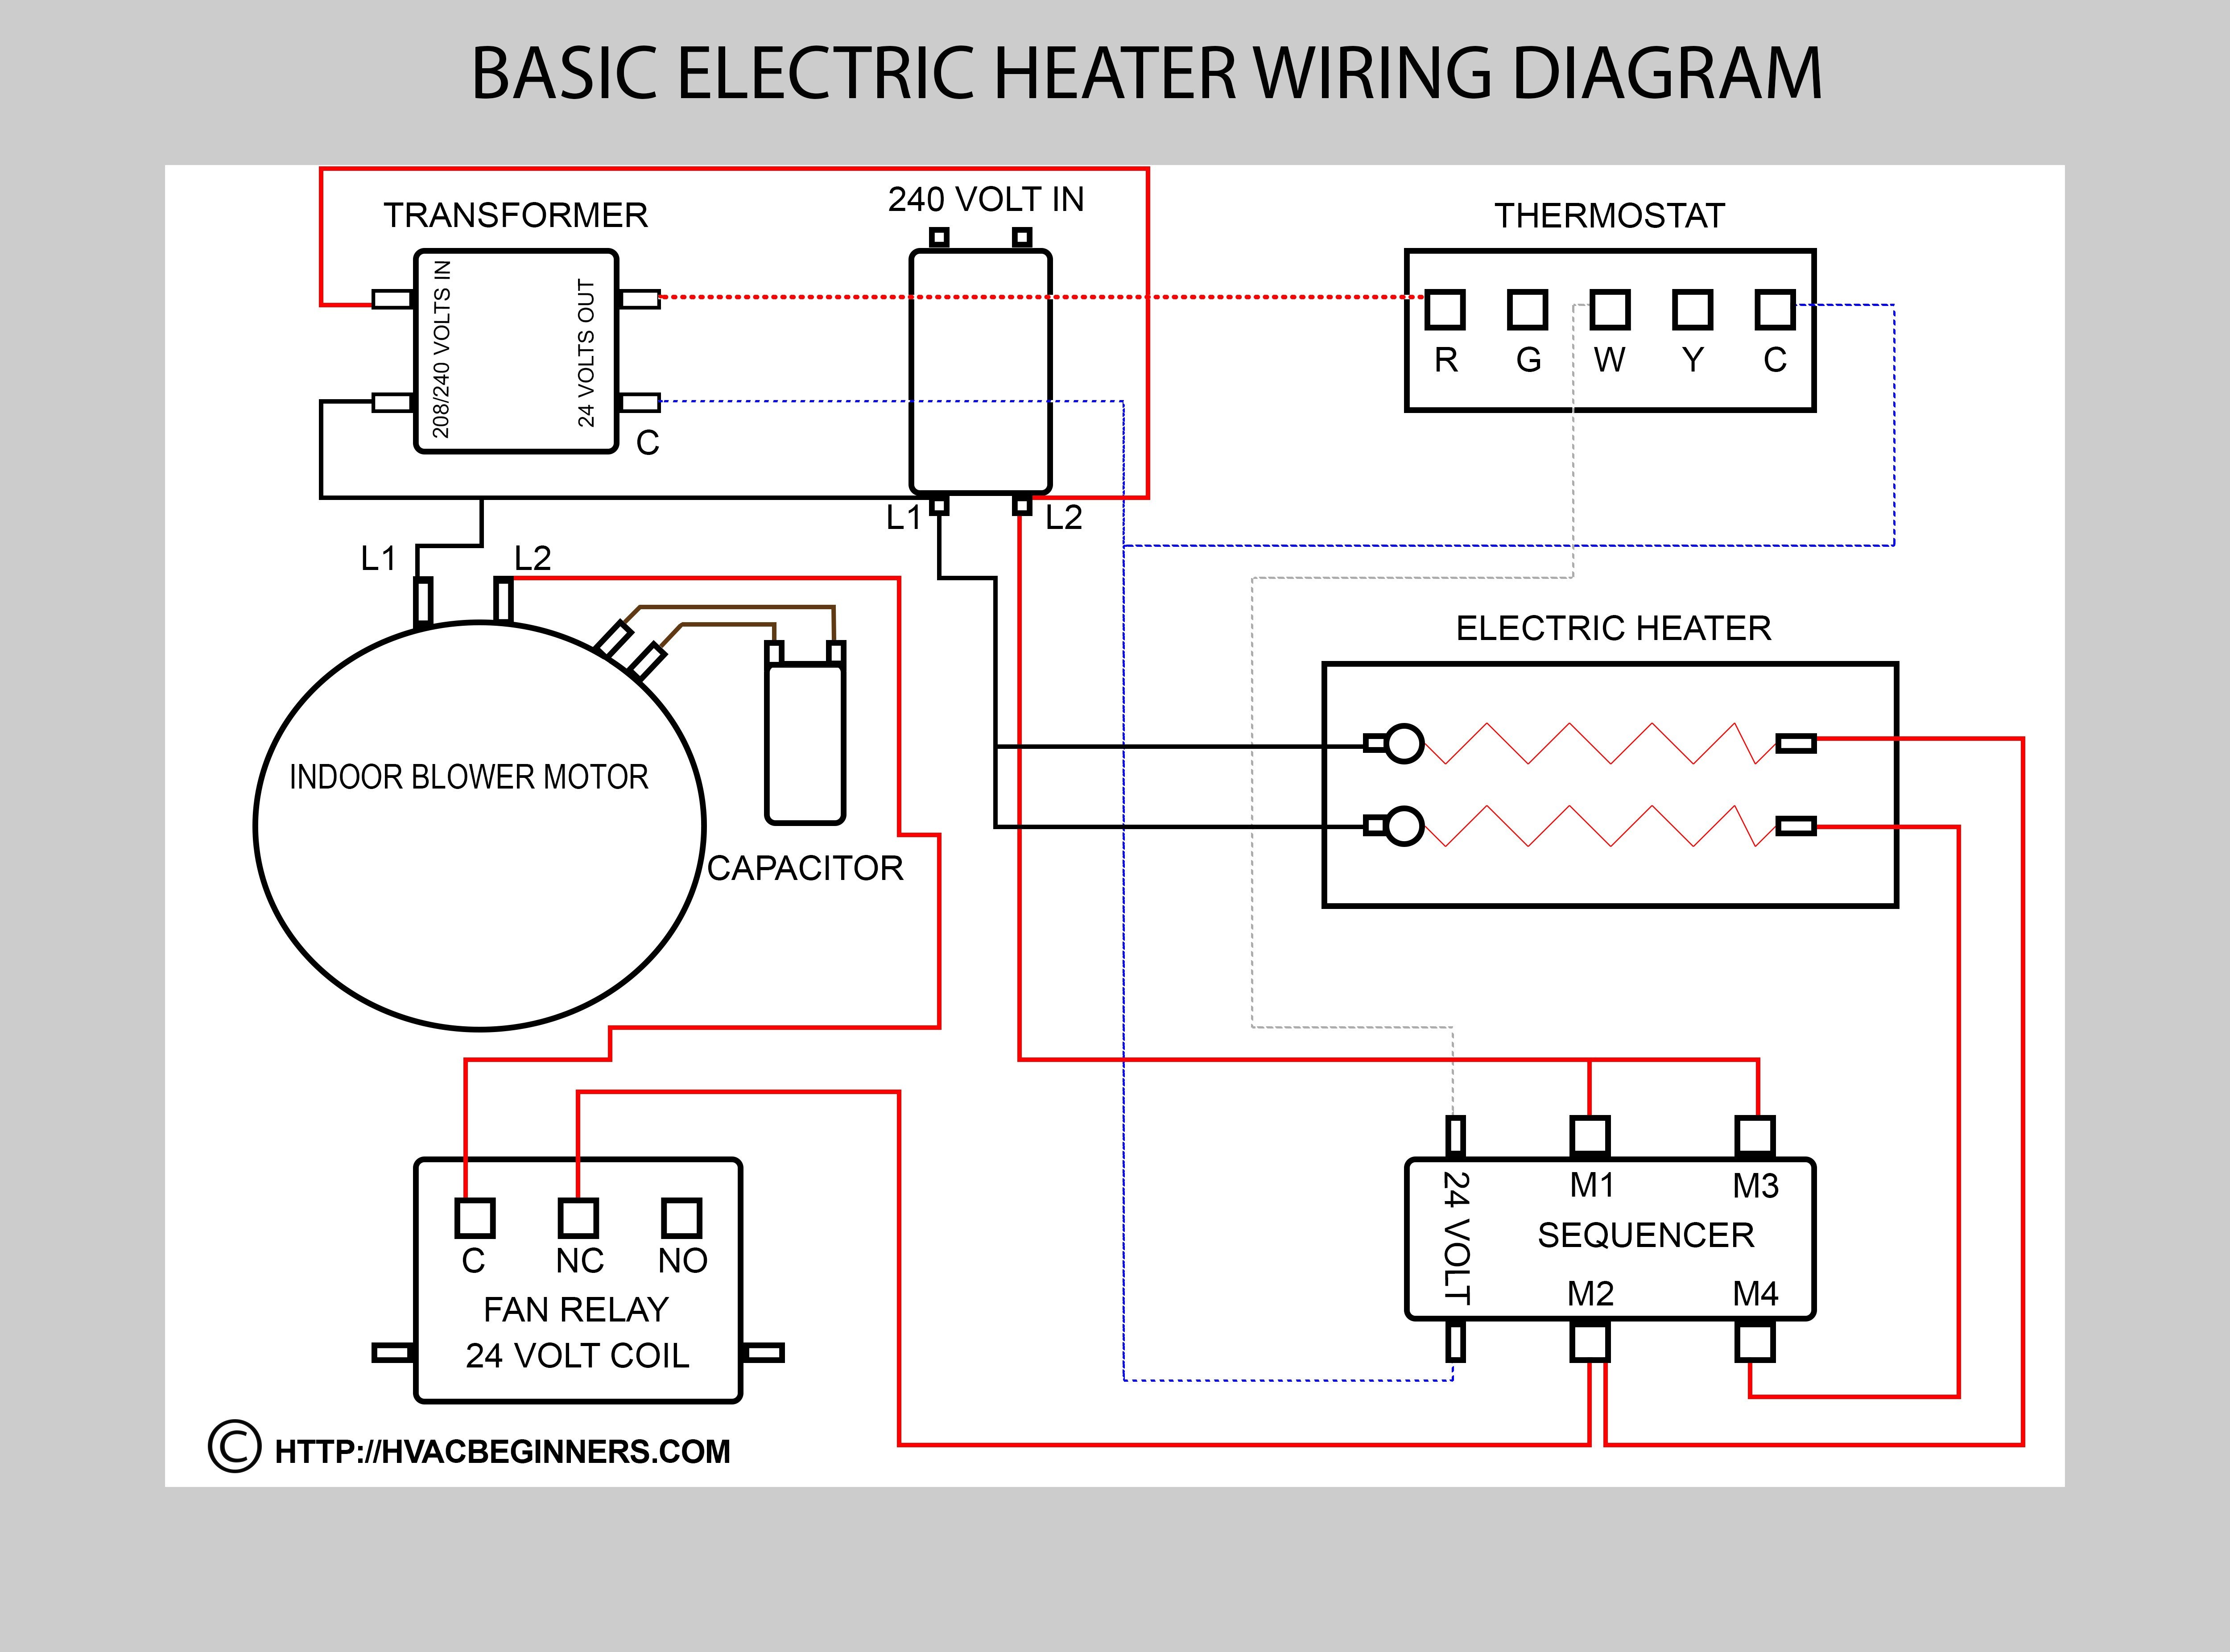 Nest Wireless thermostat Wiring Diagram Save Nest 3rd Generation Wiring Diagram